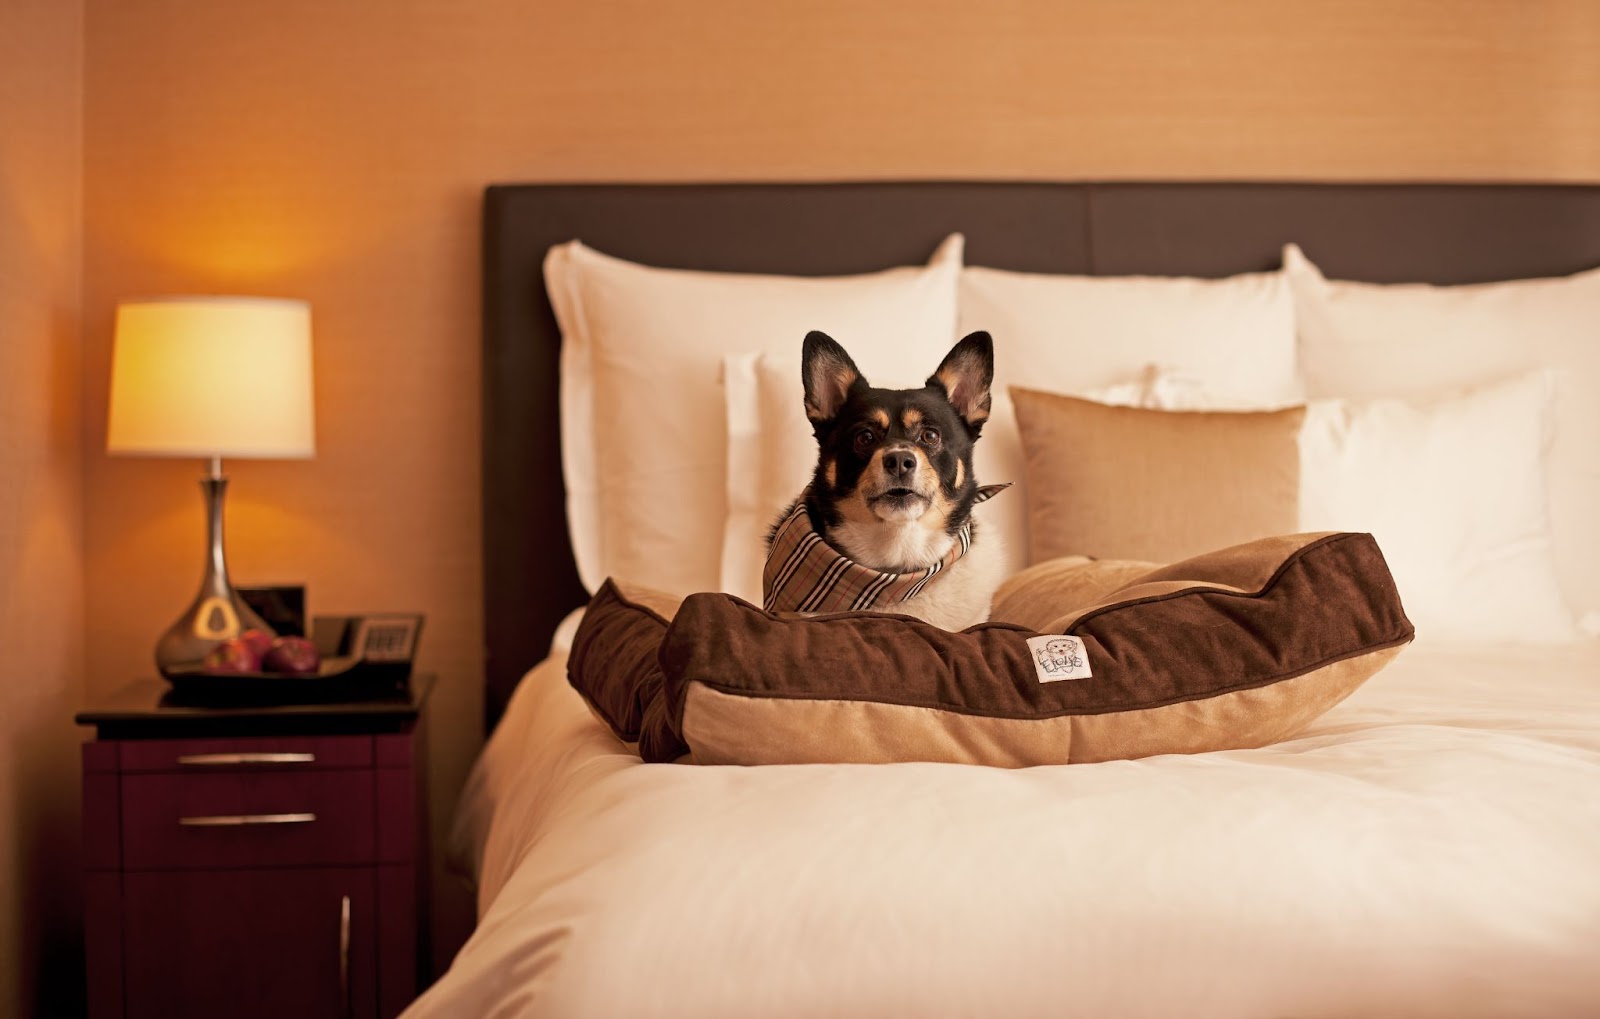 Hotelaria abraça a tendência pet friendly